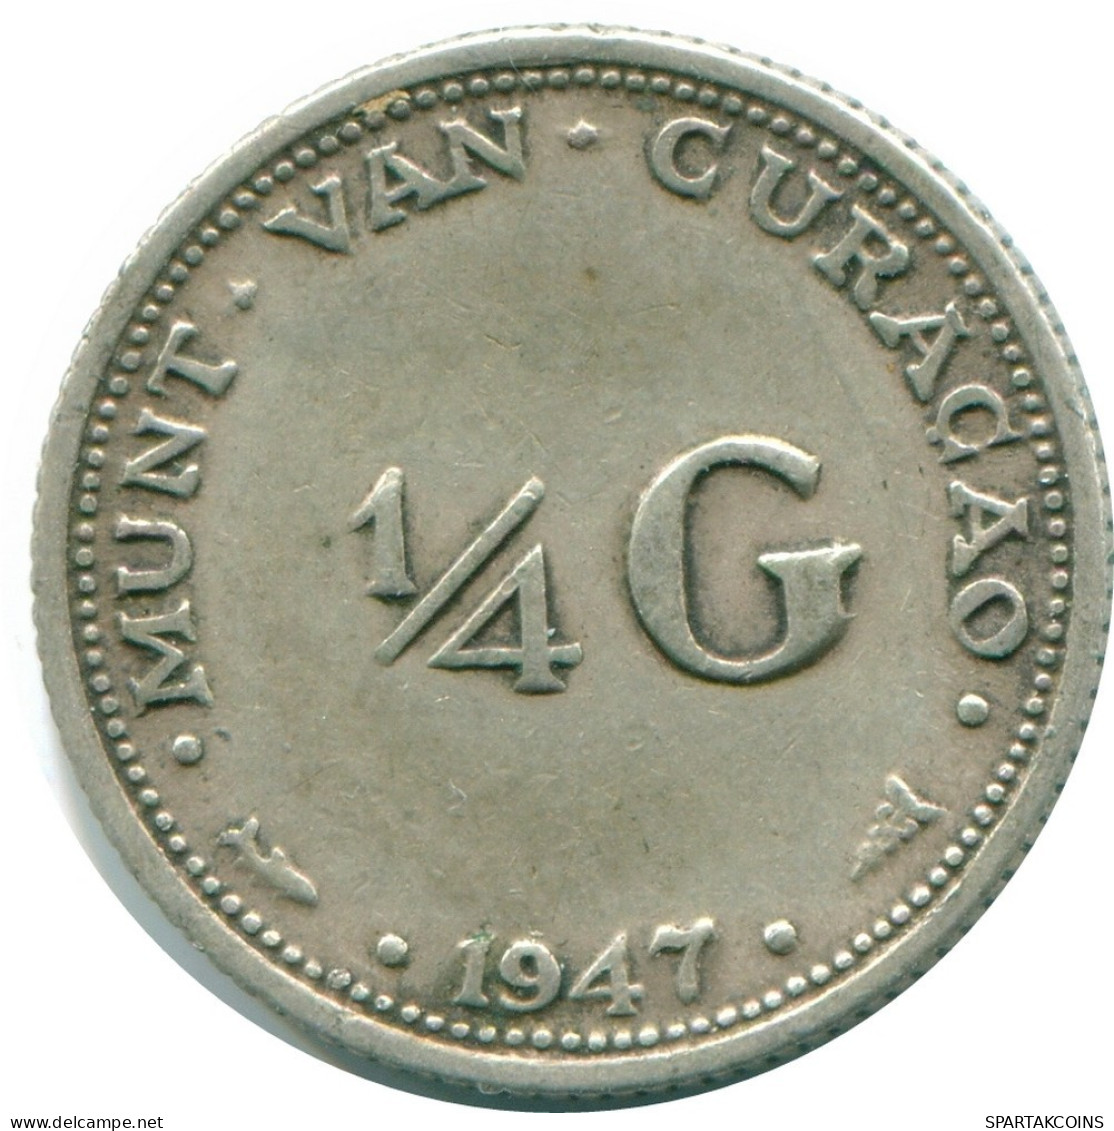 1/4 GULDEN 1947 CURACAO Netherlands SILVER Colonial Coin #NL10749.4.U.A - Curaçao